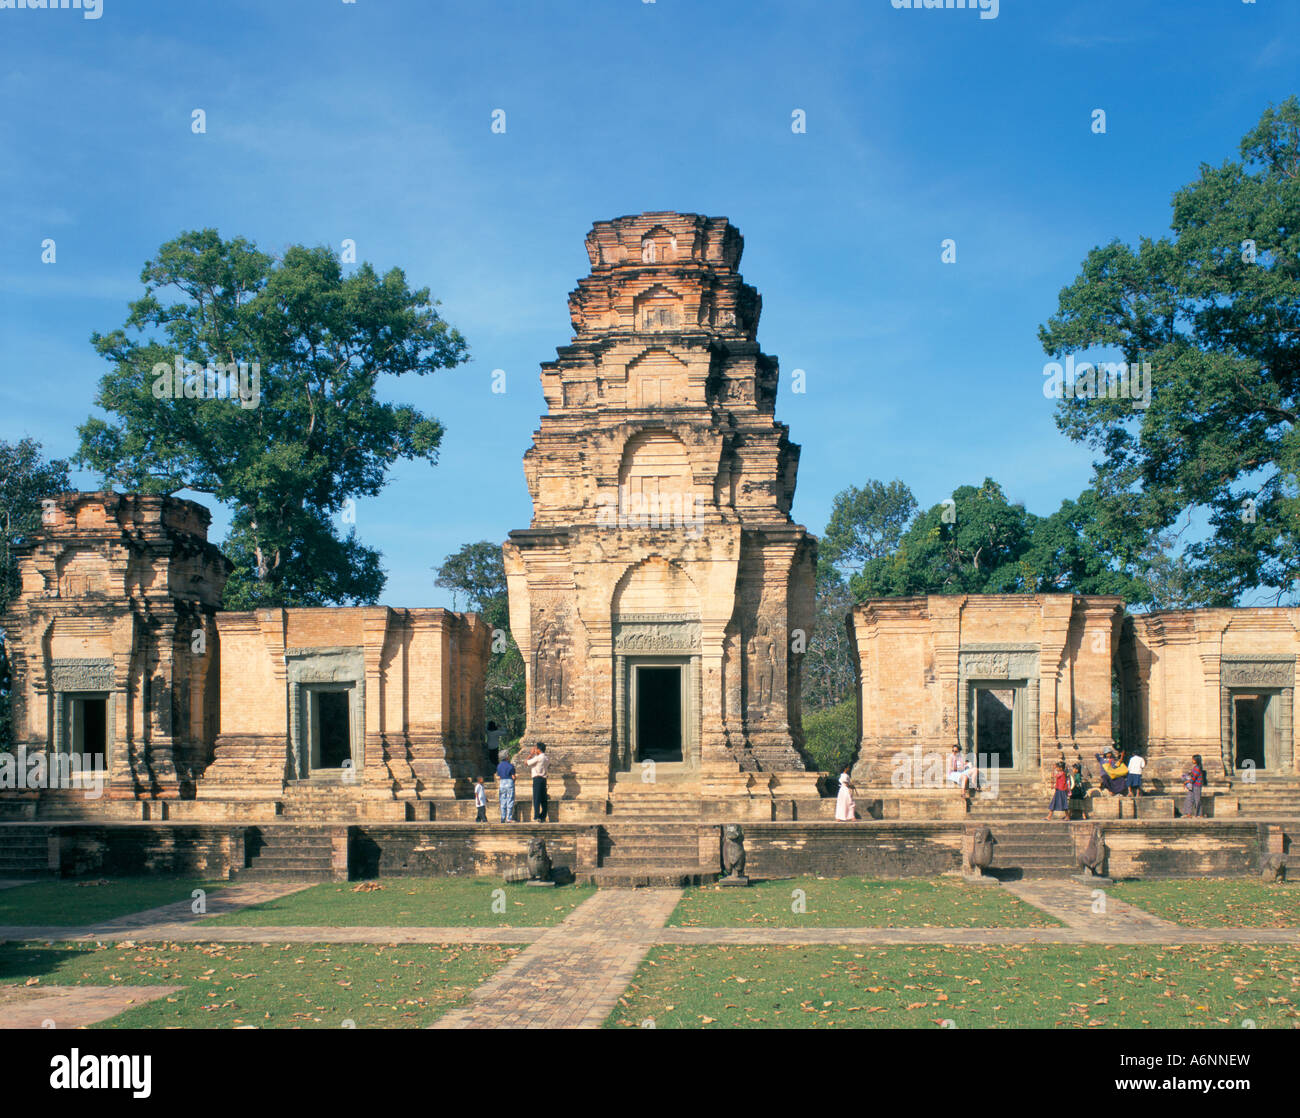 Prasat Kravan Angkor Siem Reap Cambogia Indocina Asia del sud-est asiatico Foto Stock